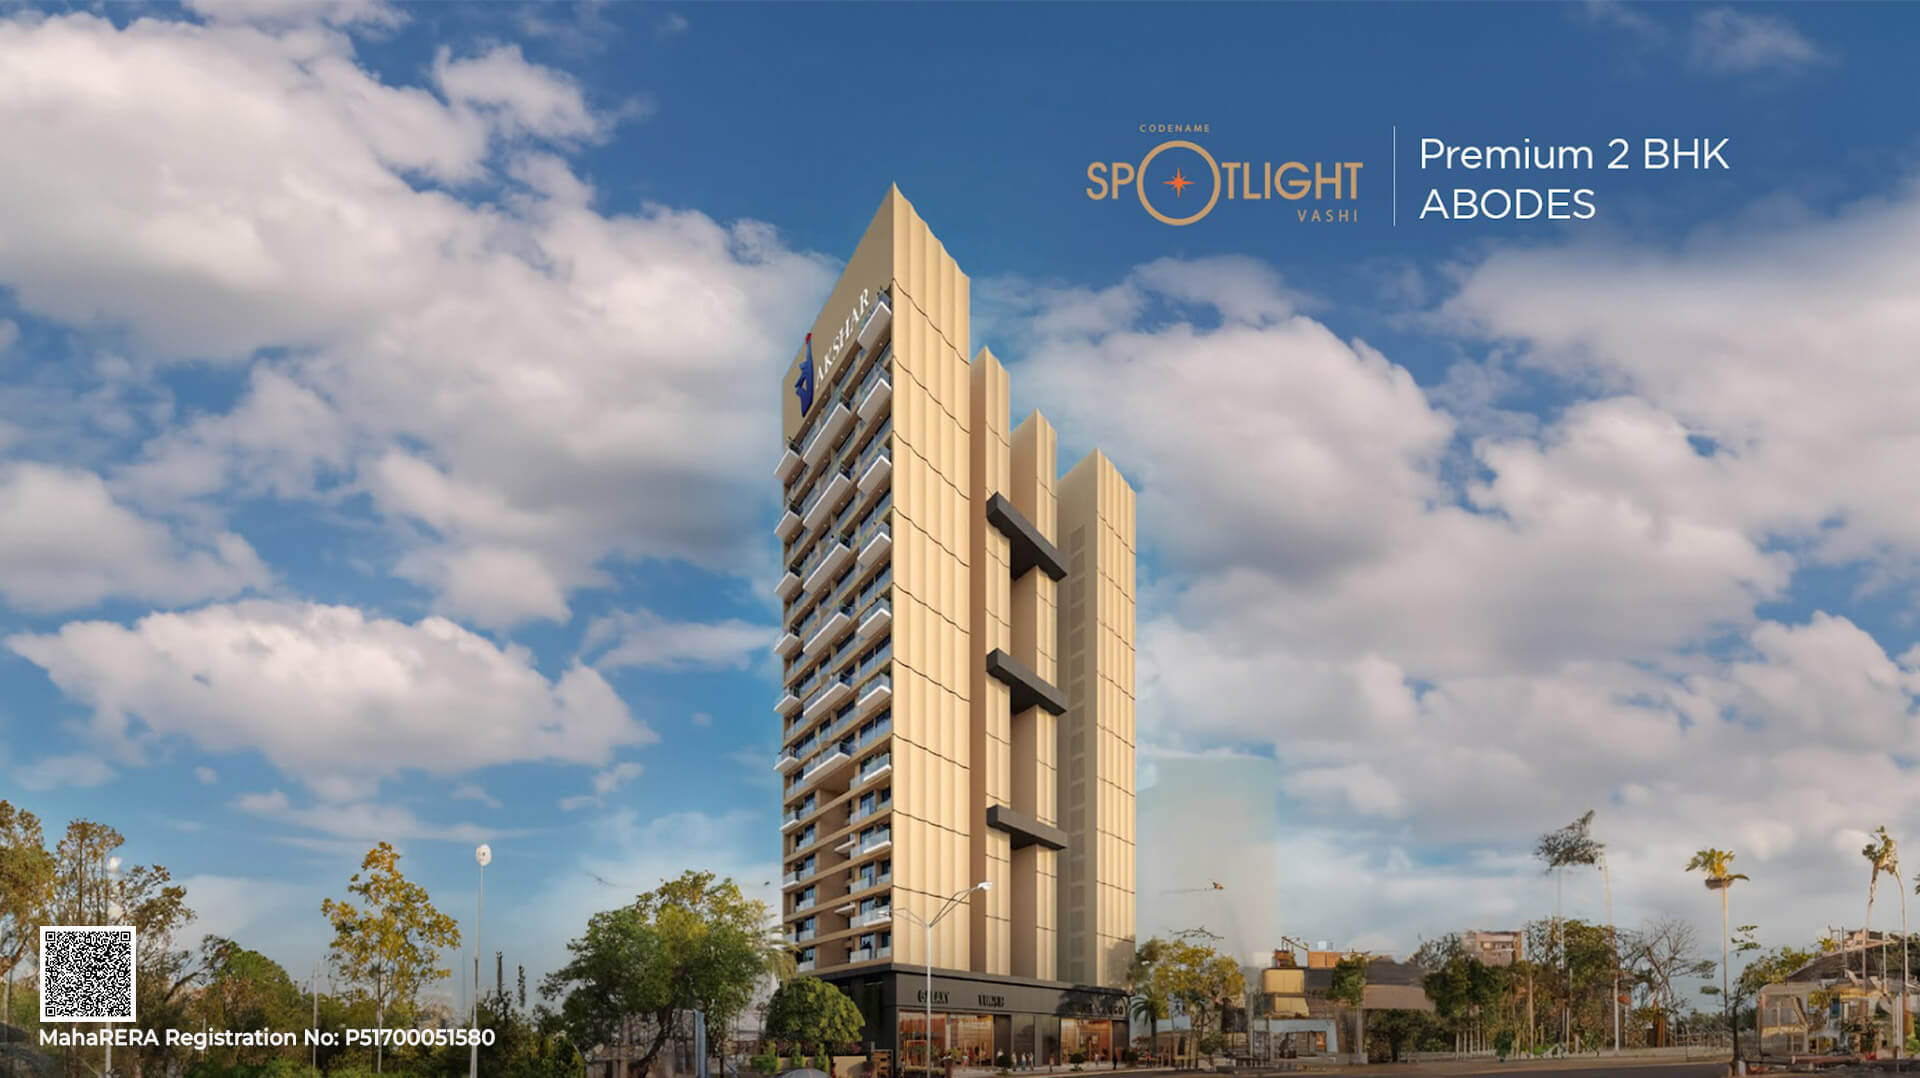 Akshar Codename Spotlight Metropolis Apartment